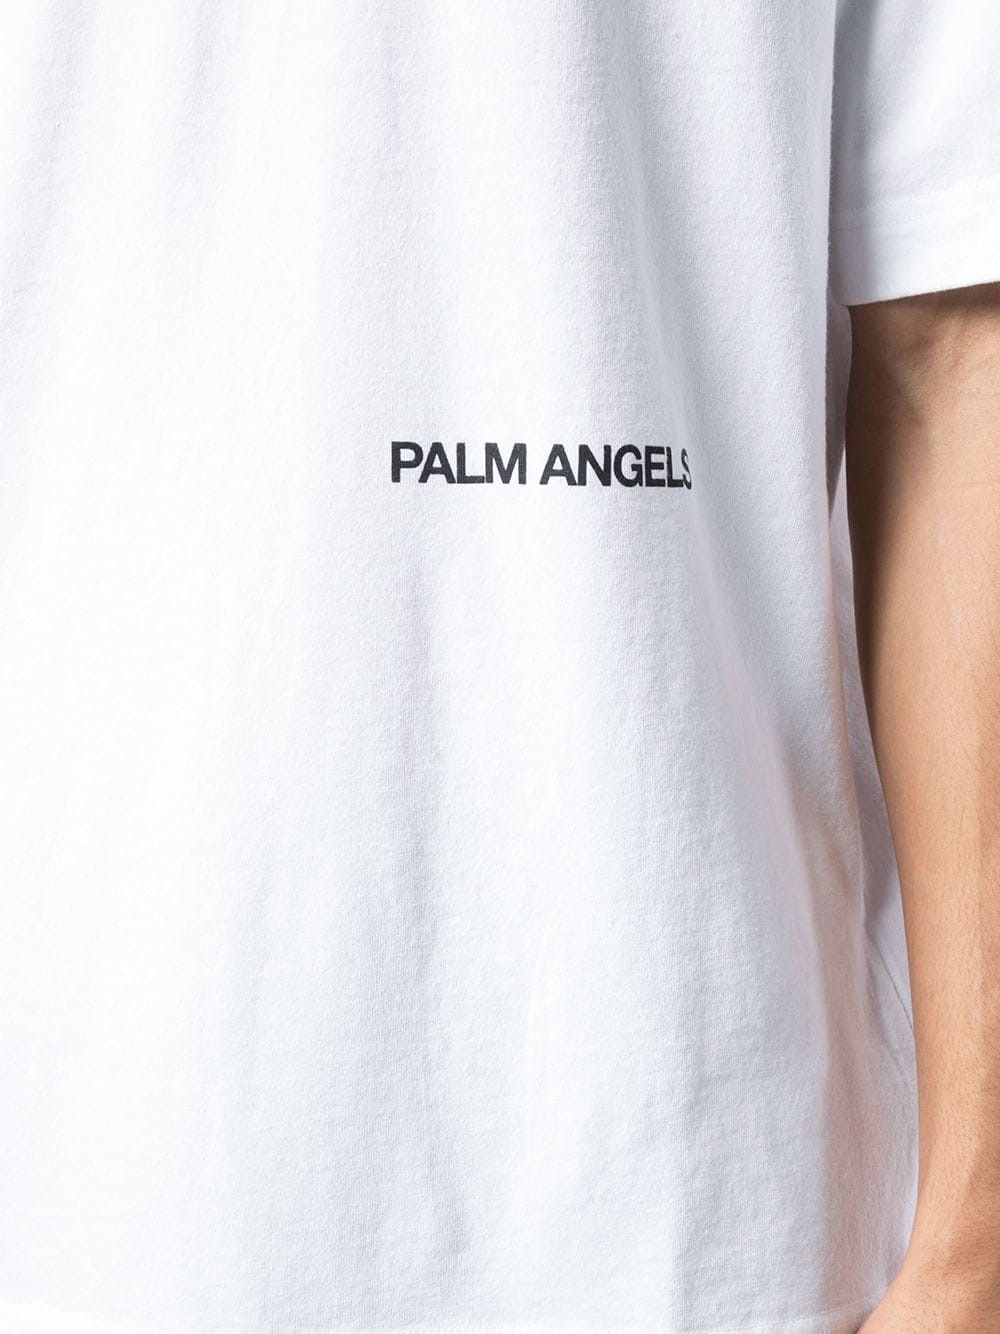 palm angels highest t shirt